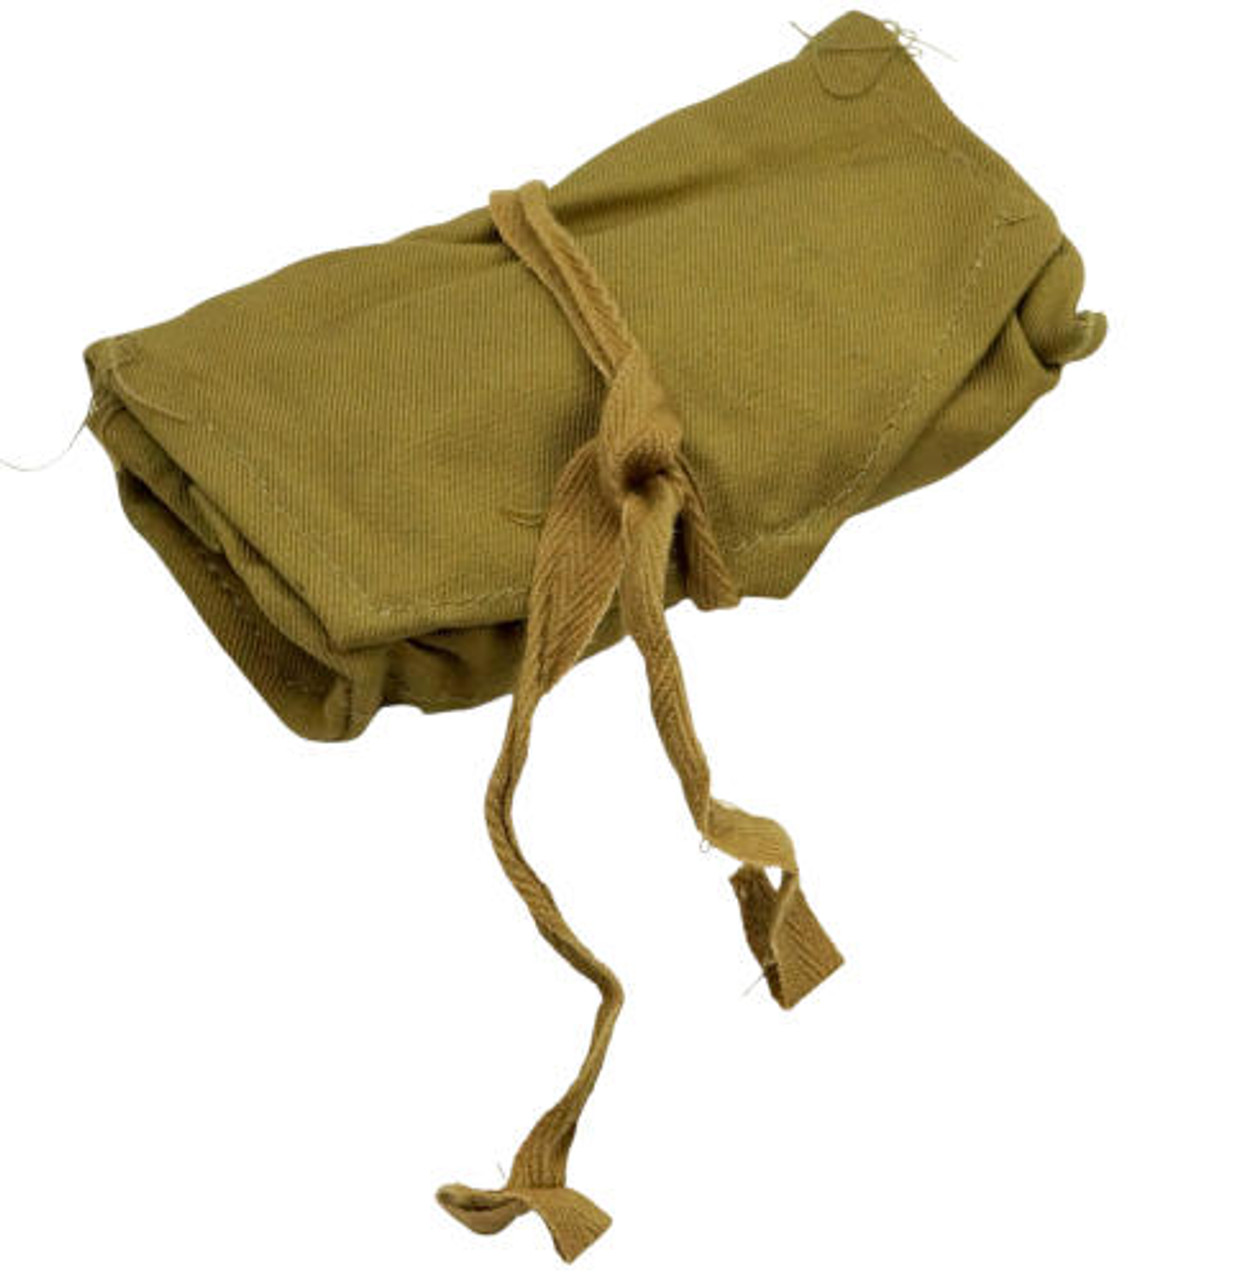 Italian Army Khaki Sewing Kit